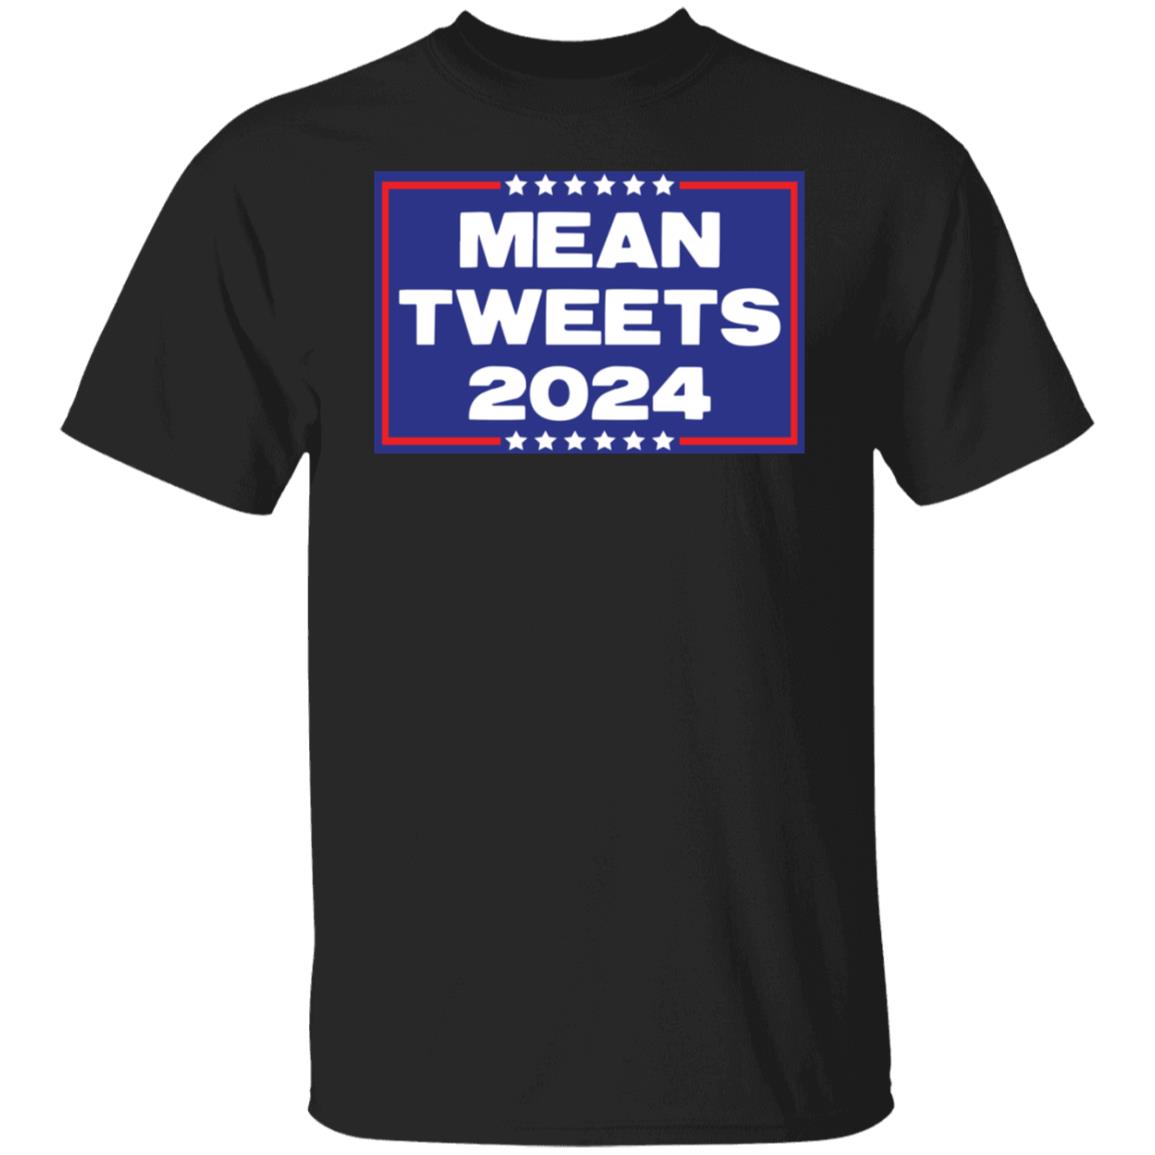 Mean tweets 2024 shirt